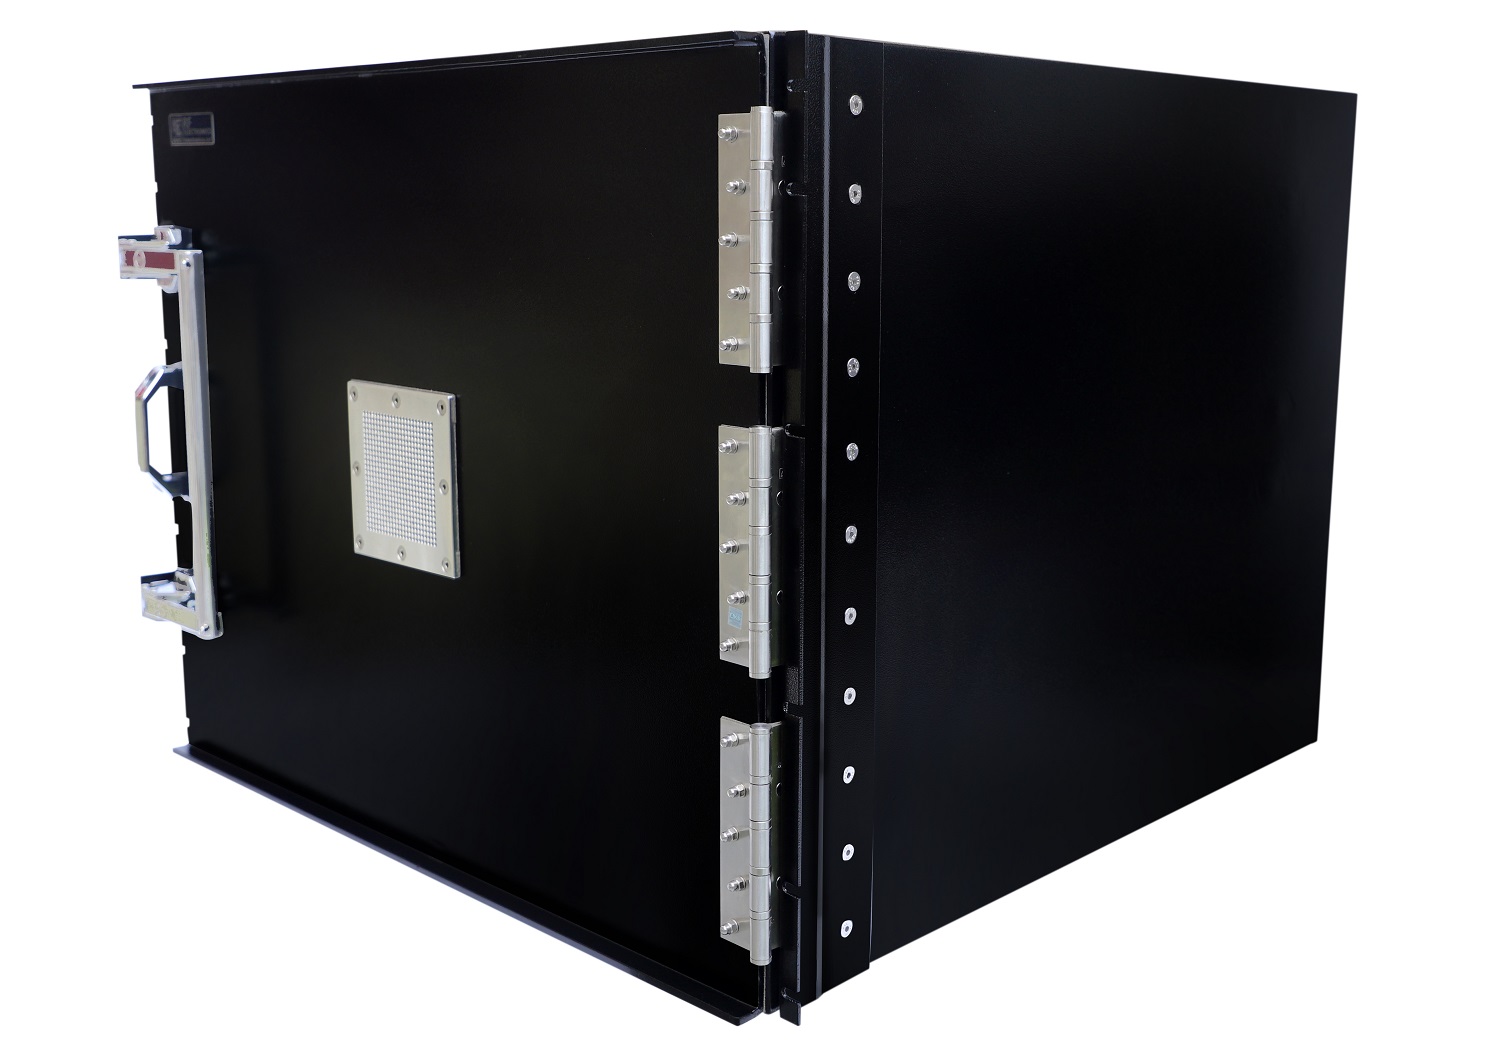 HDRF-3170-M RF Shield Test Box